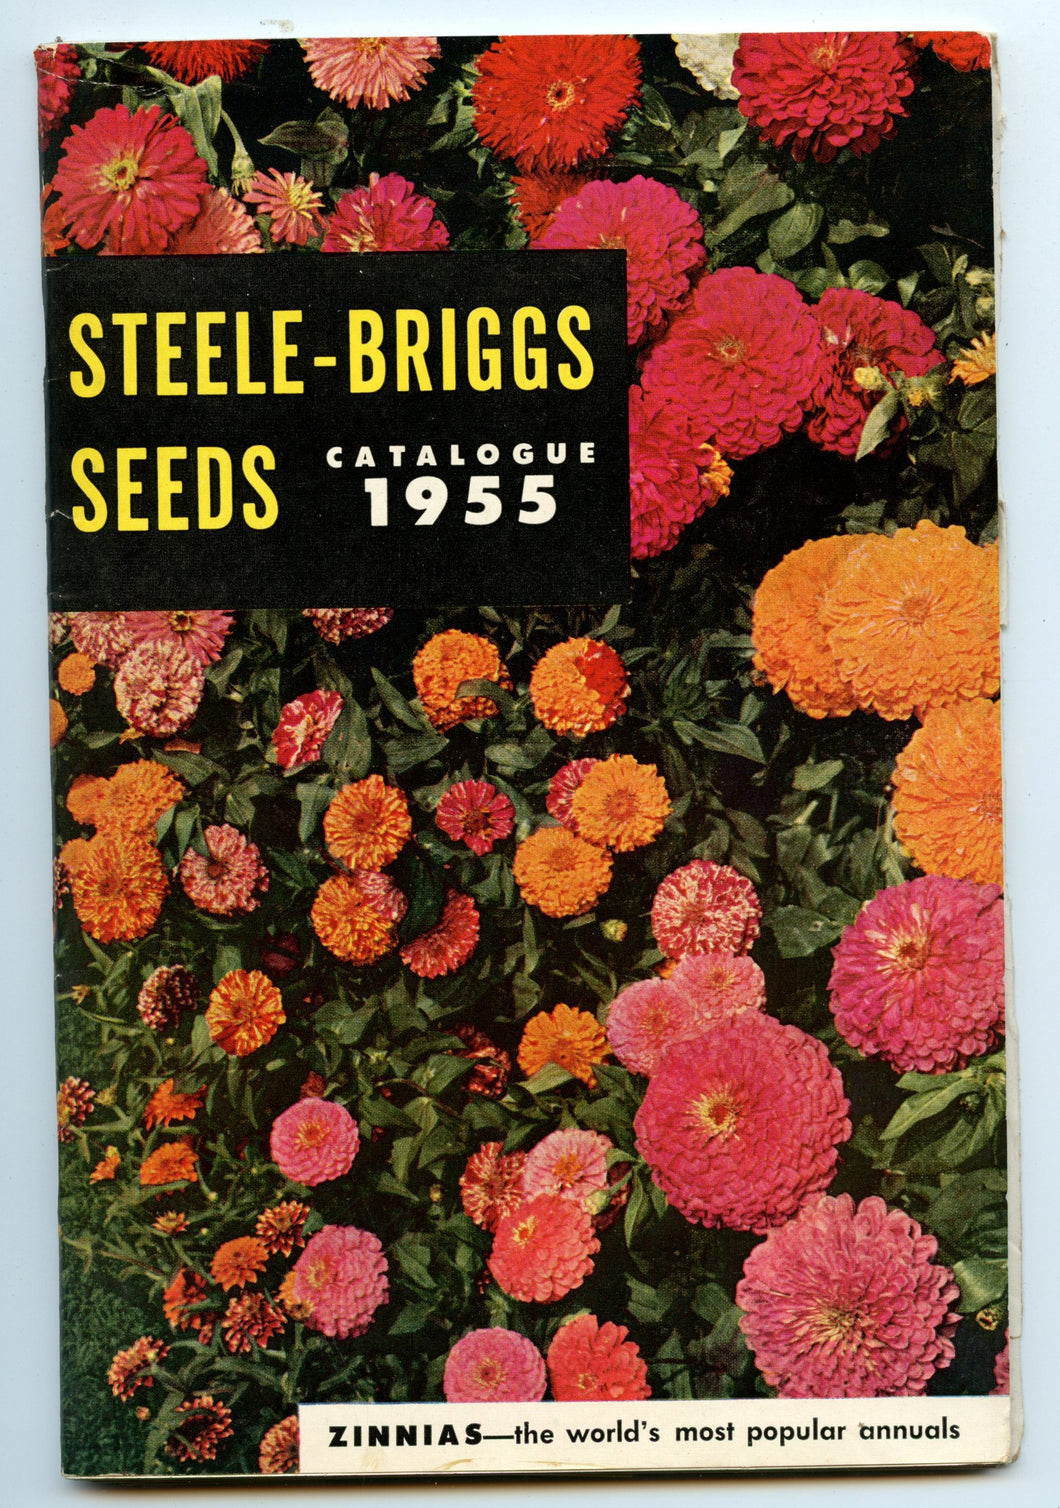 Steele-Briggs Seeds Catalogue 1955